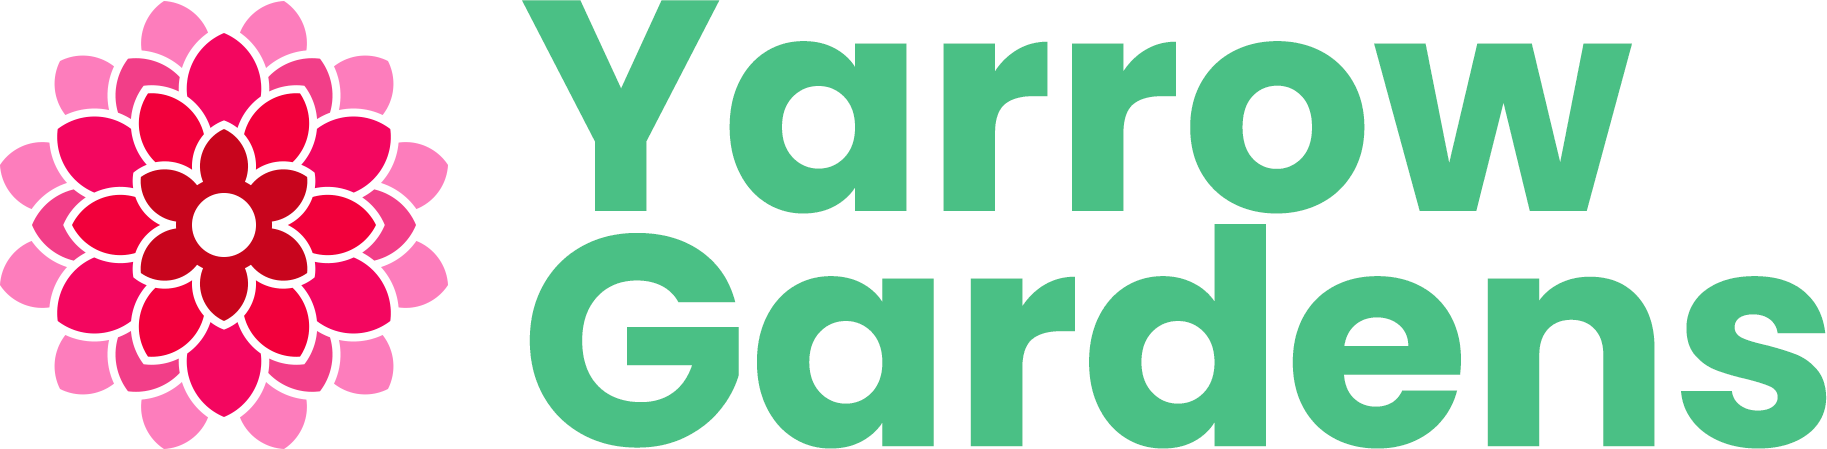 Yarrow Gardens